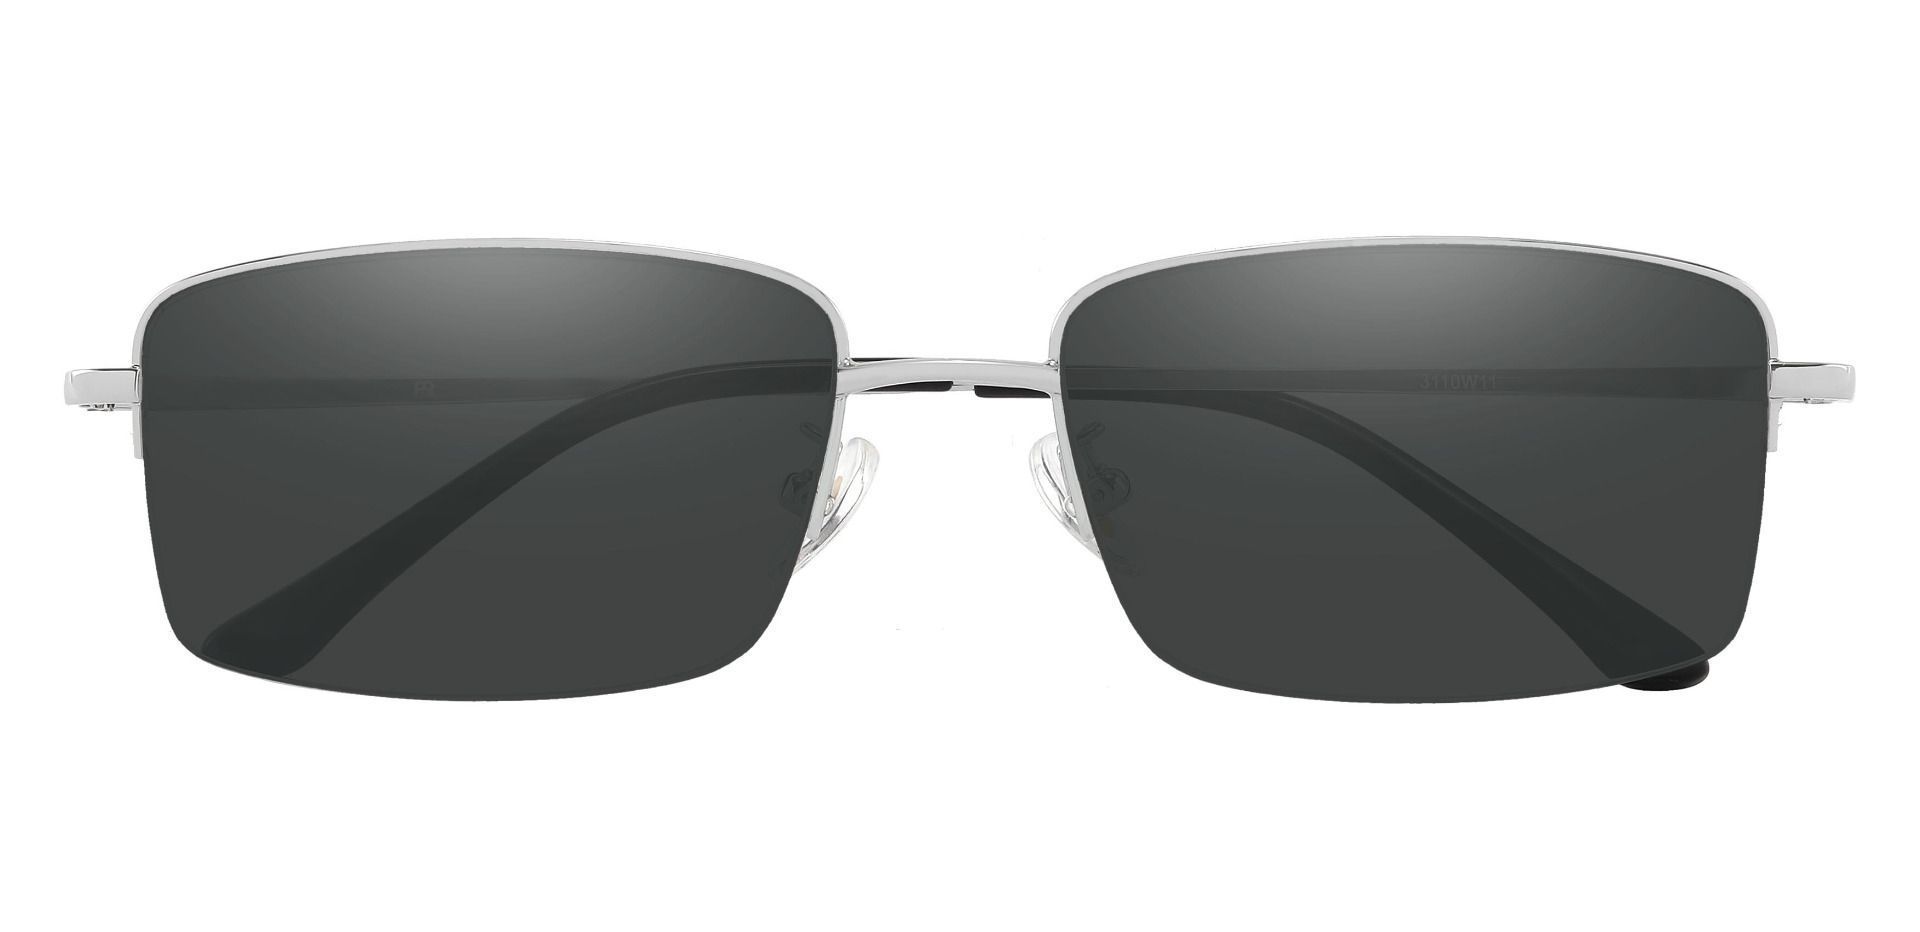 Bellmont Rectangle Prescription Sunglasses - Silver Frame With Gray Lenses